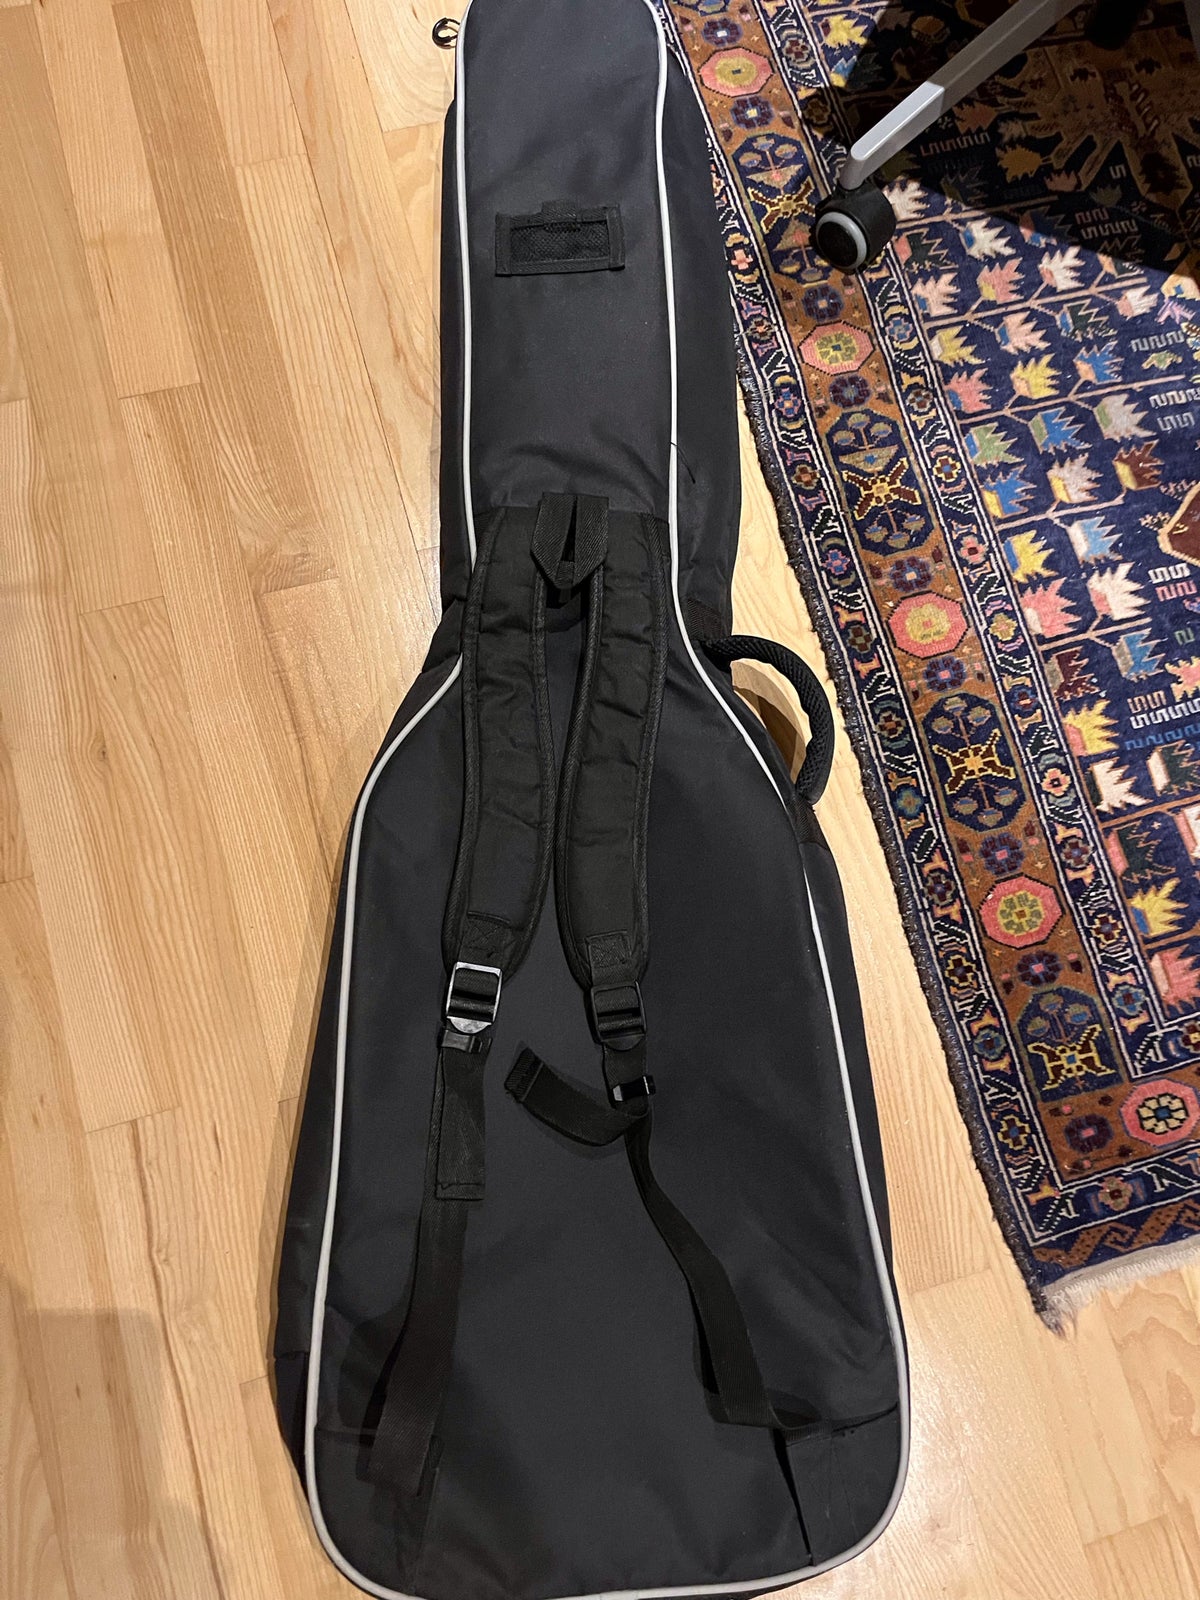 Guitarstativ og taske, Supreme + 4Sound gulv